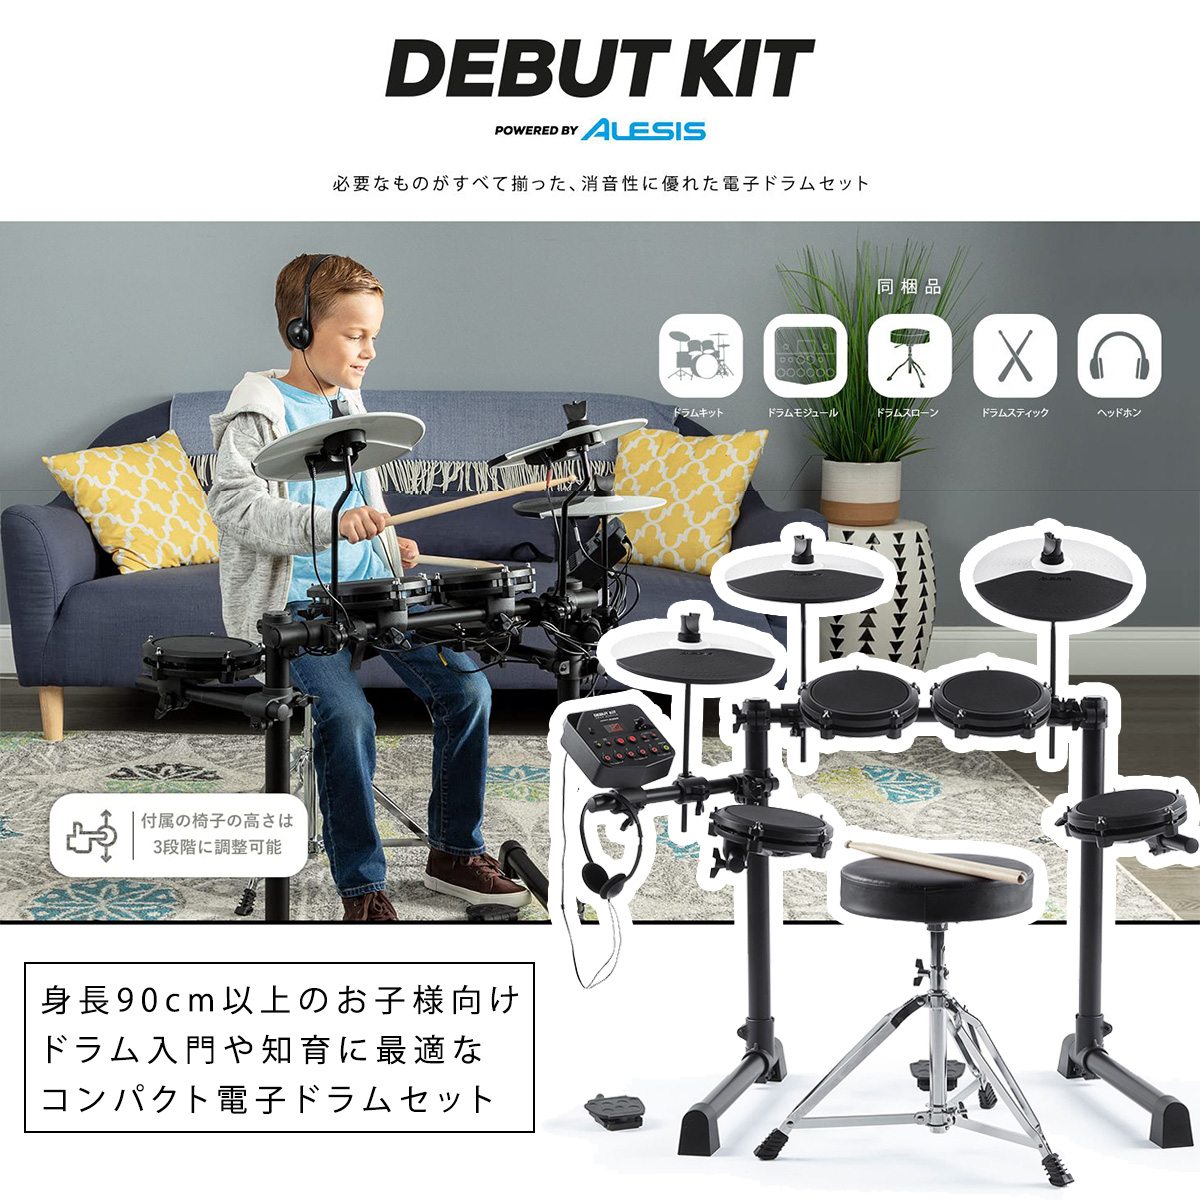 ALESIS Debut Kit 電子ドラムセット 子ども用 ミニサイズ 【アレシス DebutKit】